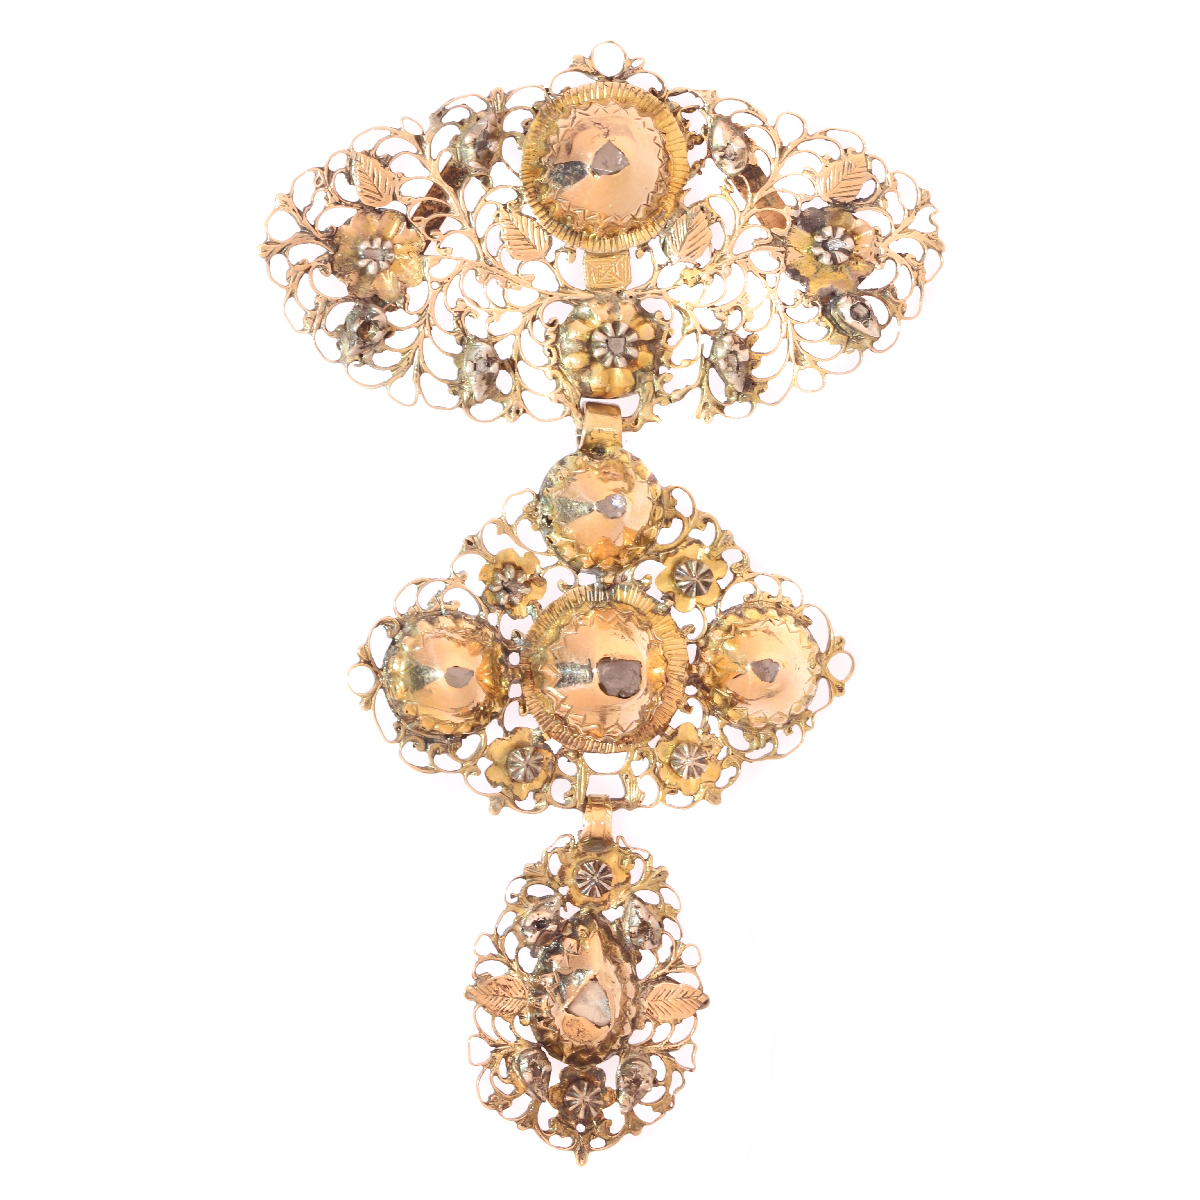 Early 19th century gold diamond pendant called a la jeanette